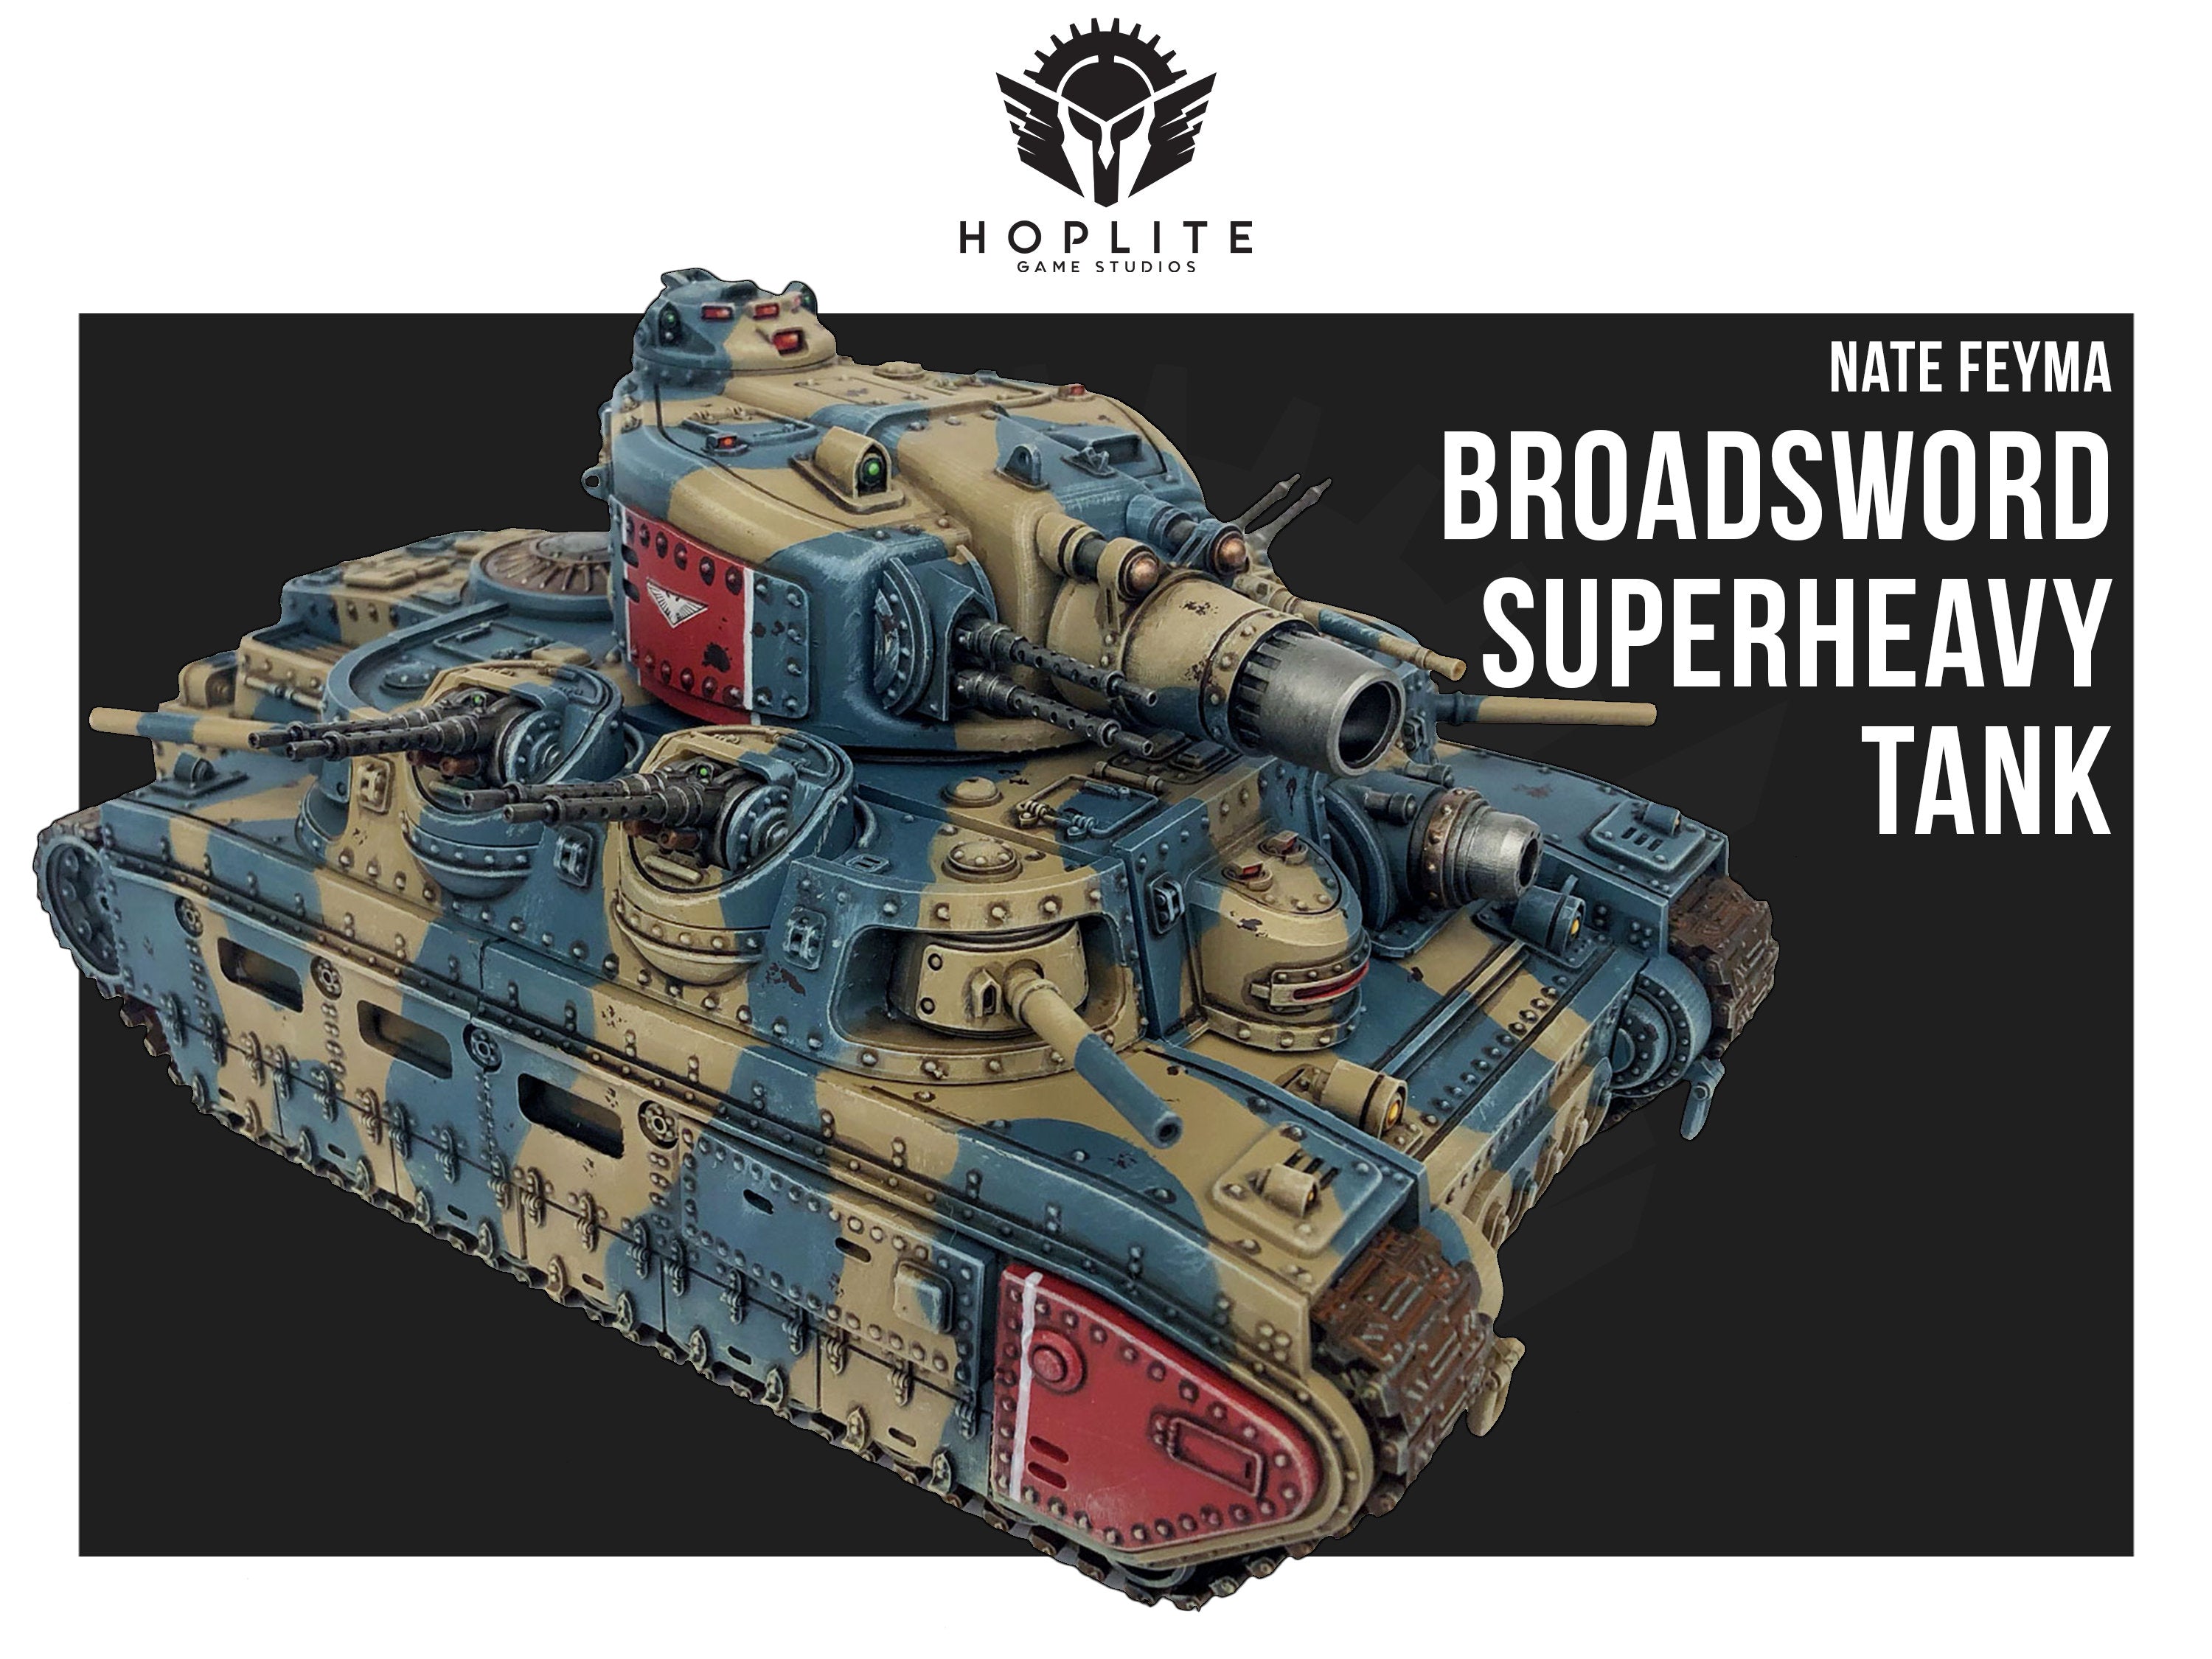 The Broadsword Superheavy Battle Tank